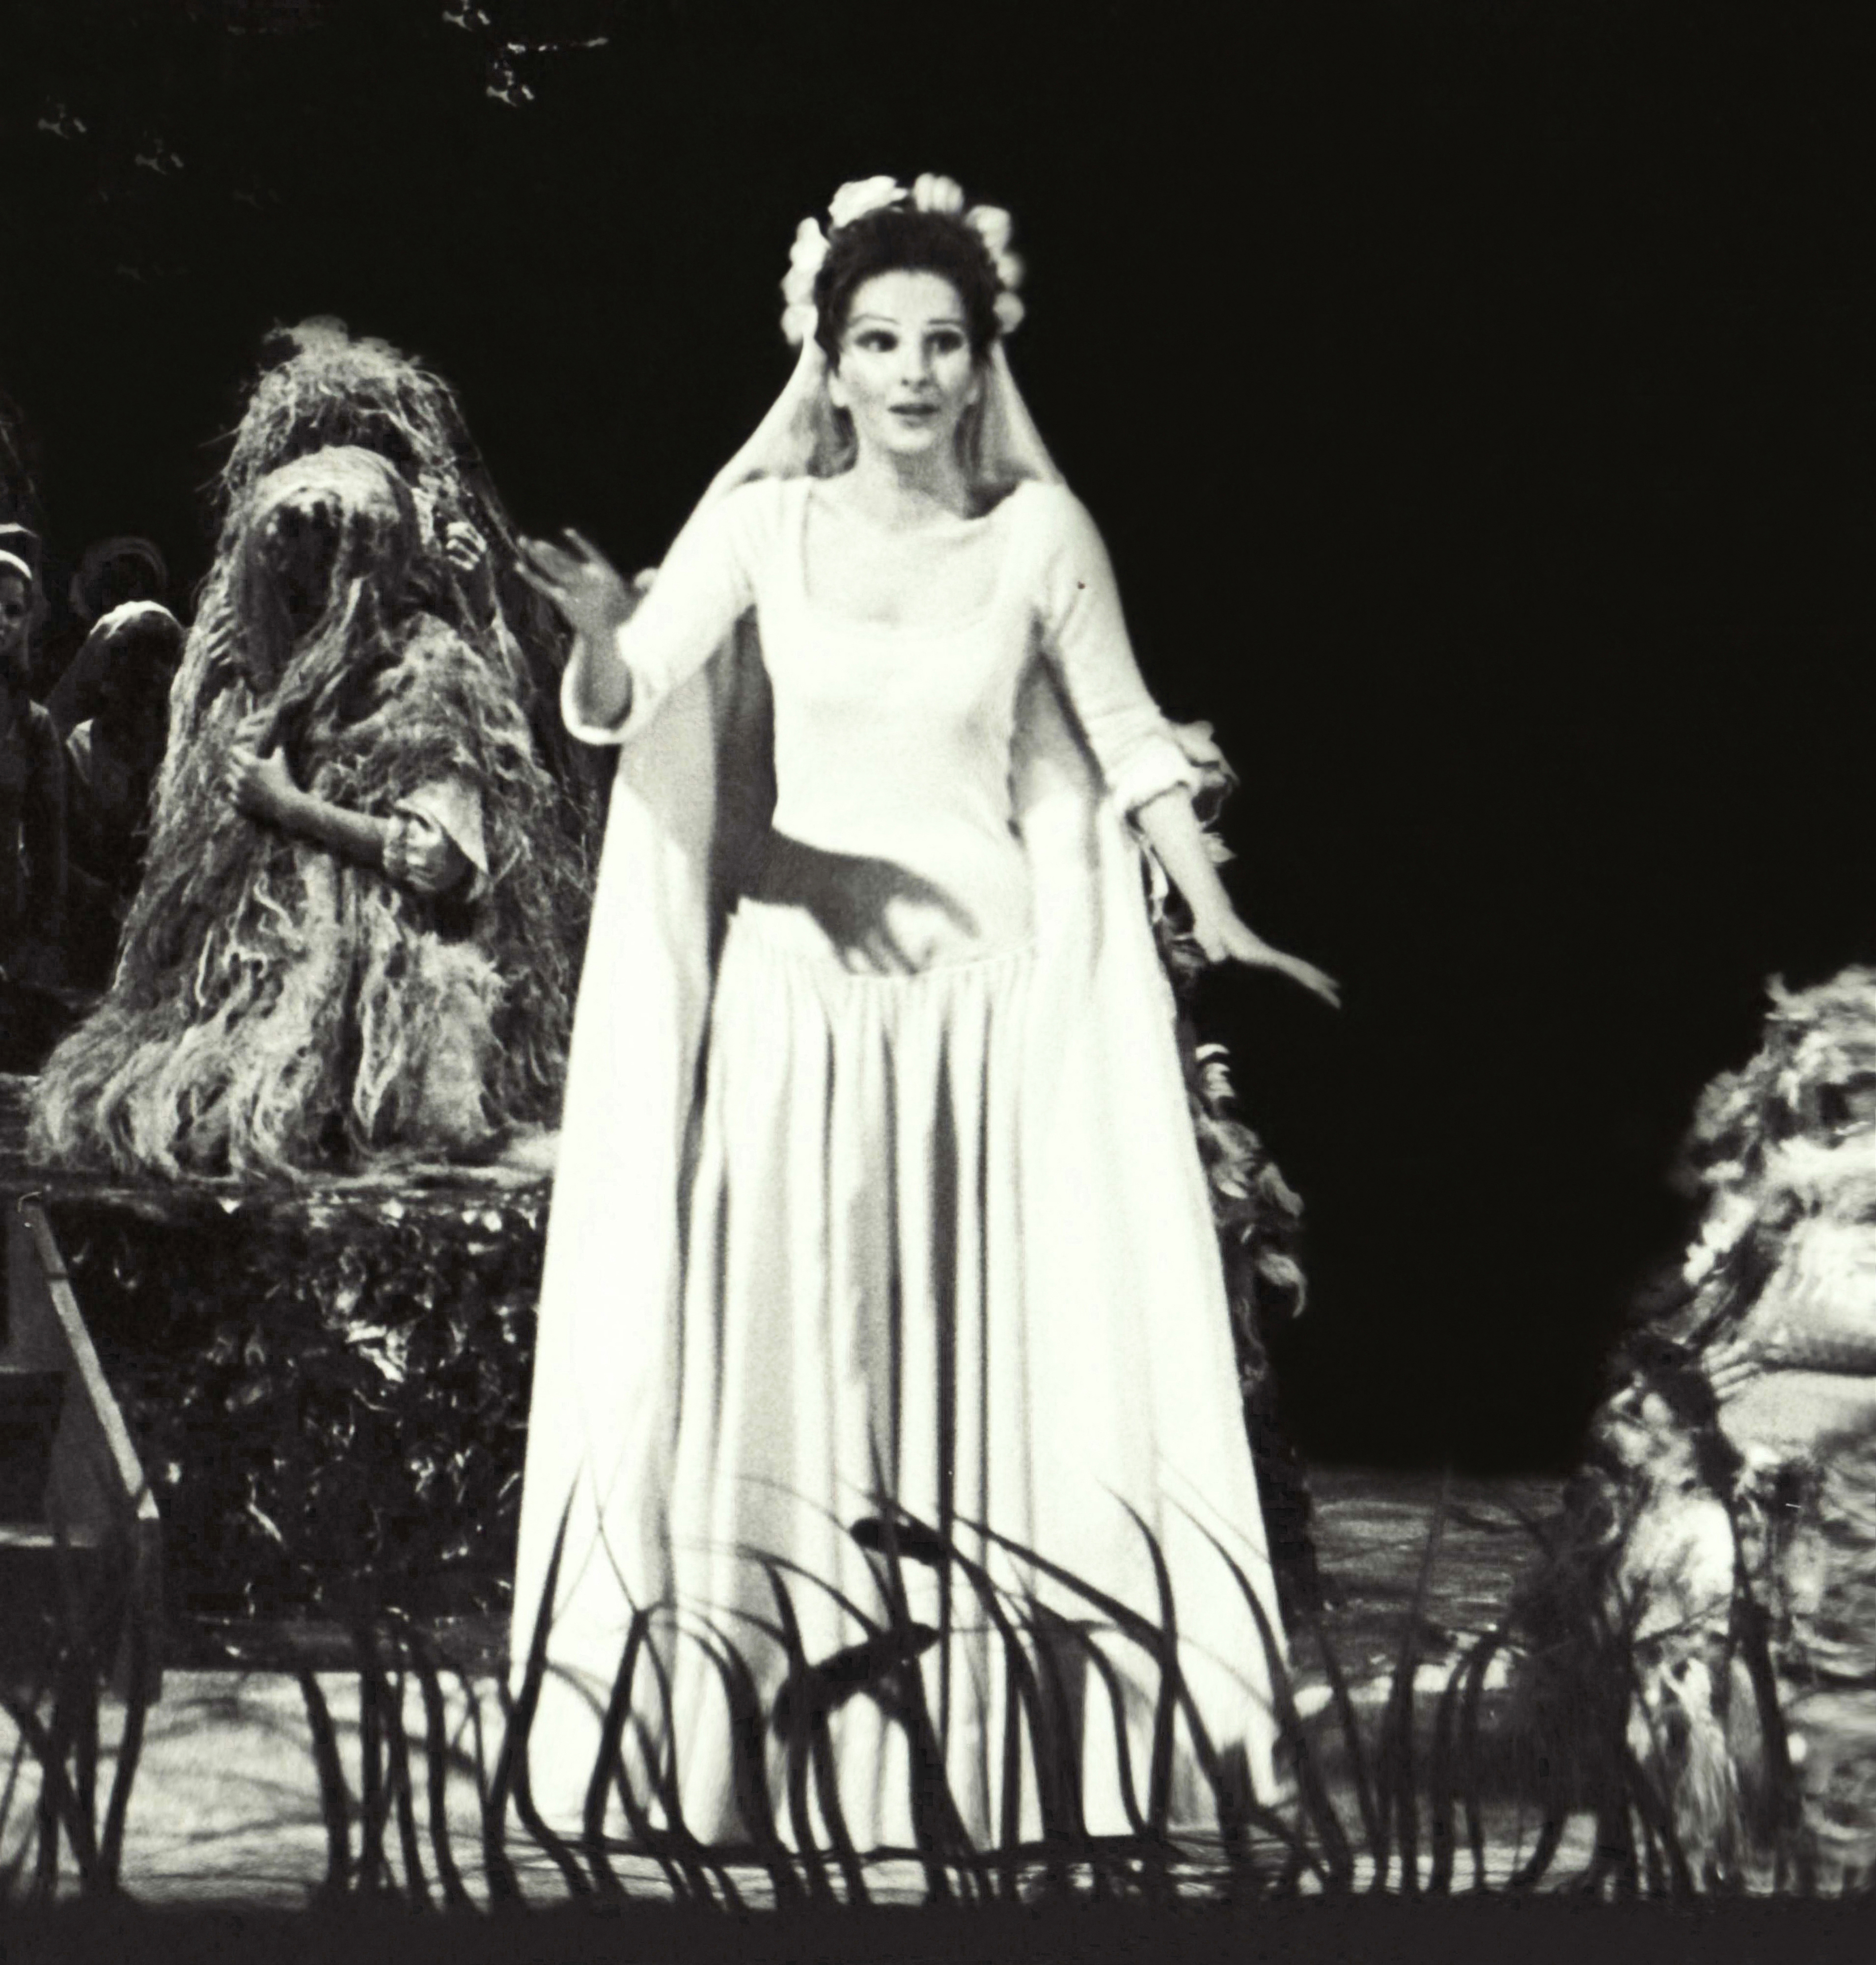 Lucia Aliberti⚘Opera⚘”Falstaff"⚘Glyndebourne Festival Opera⚘Glyndebourne⚘On Stage⚘:http://www.luciaaliberti.it #luciaaliberti #glyndebournefestivalopera #glyndebourne #opera #falstaff #onstage